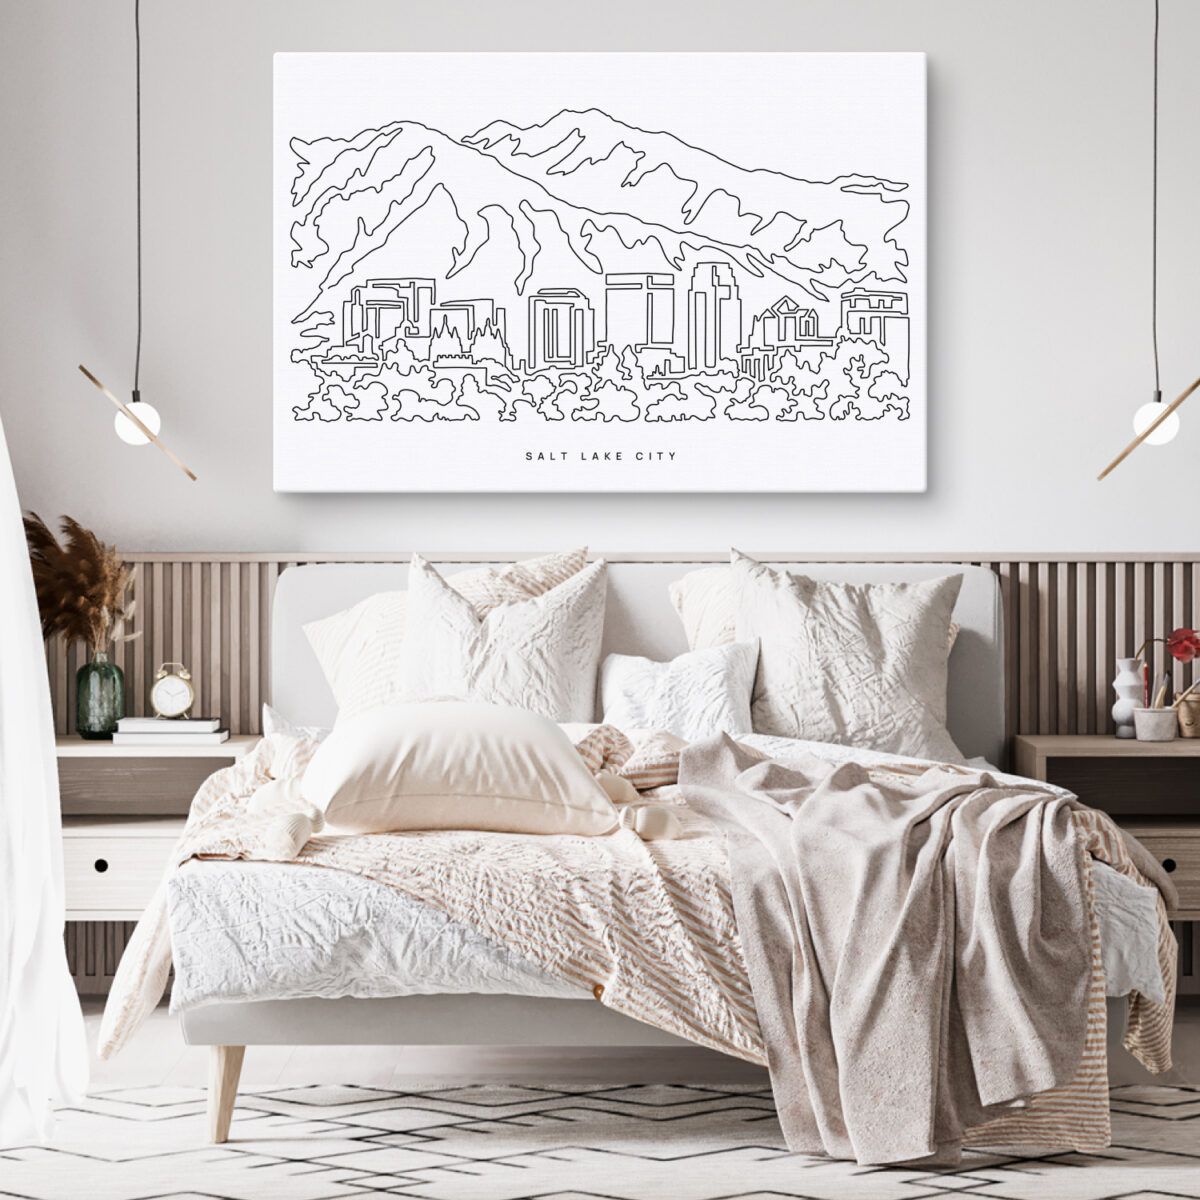 Salt Lake City Canvas Art Print - Bed Room